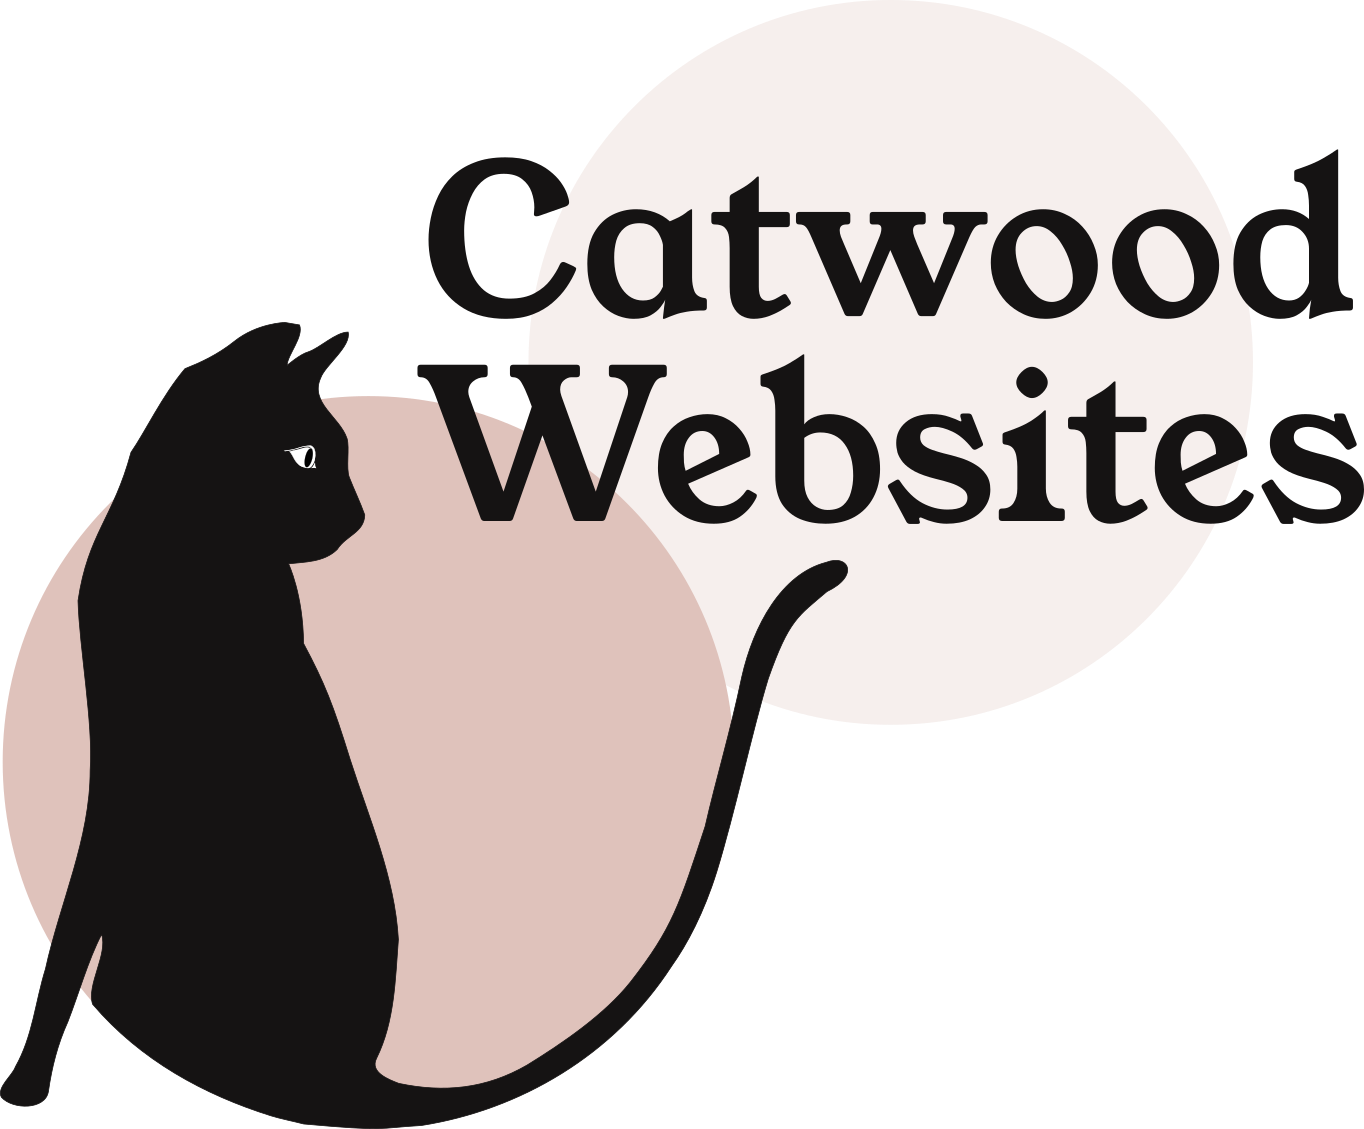 Catwood Websites